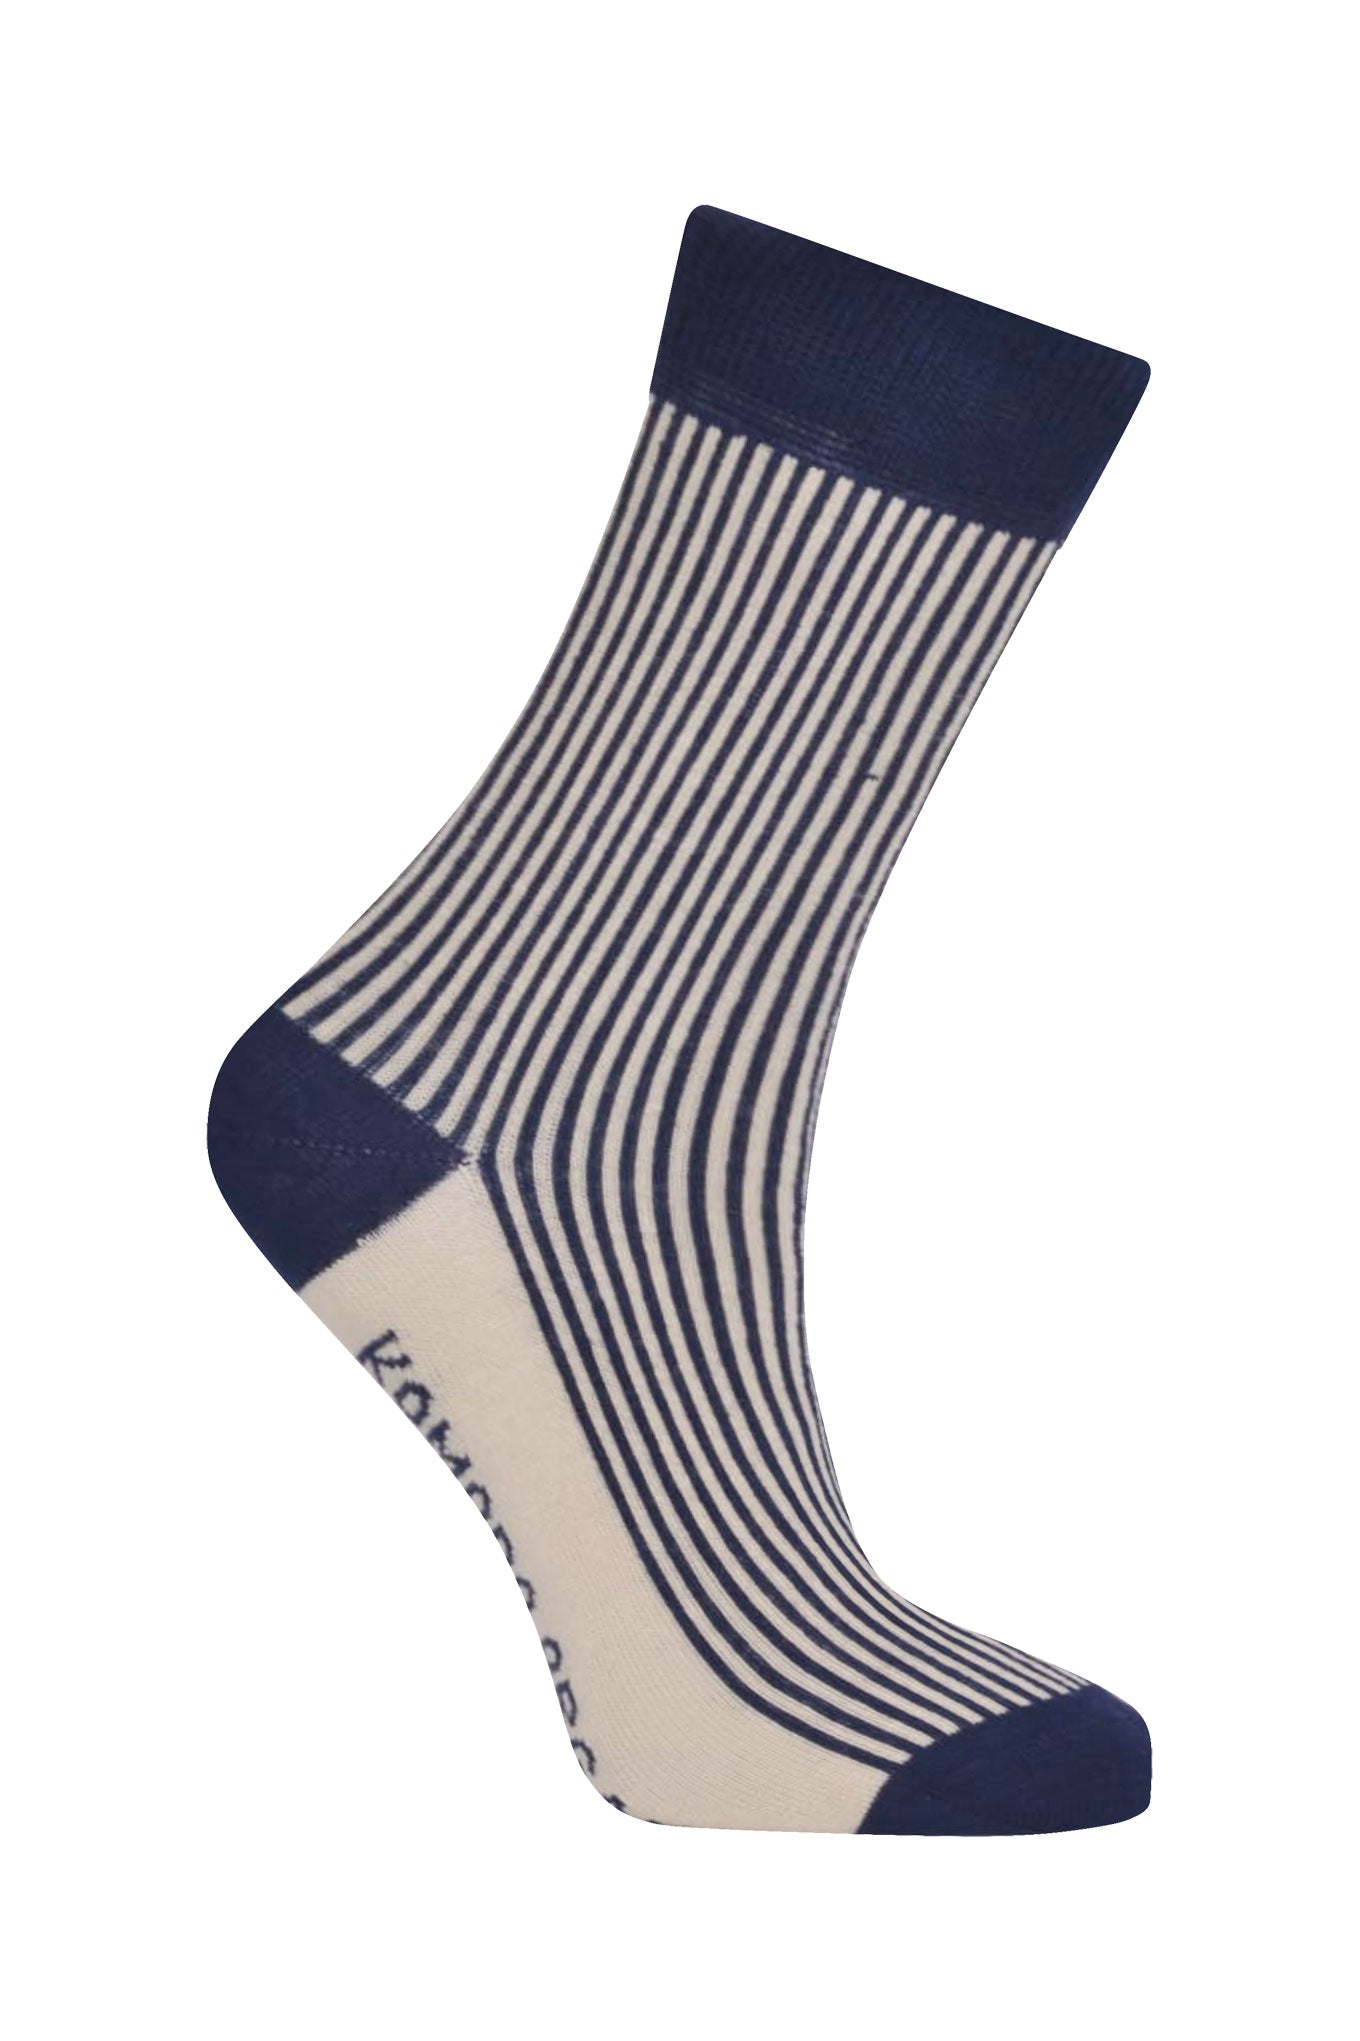 VERTICAL STRIPE - Organic Cotton Socks Navy